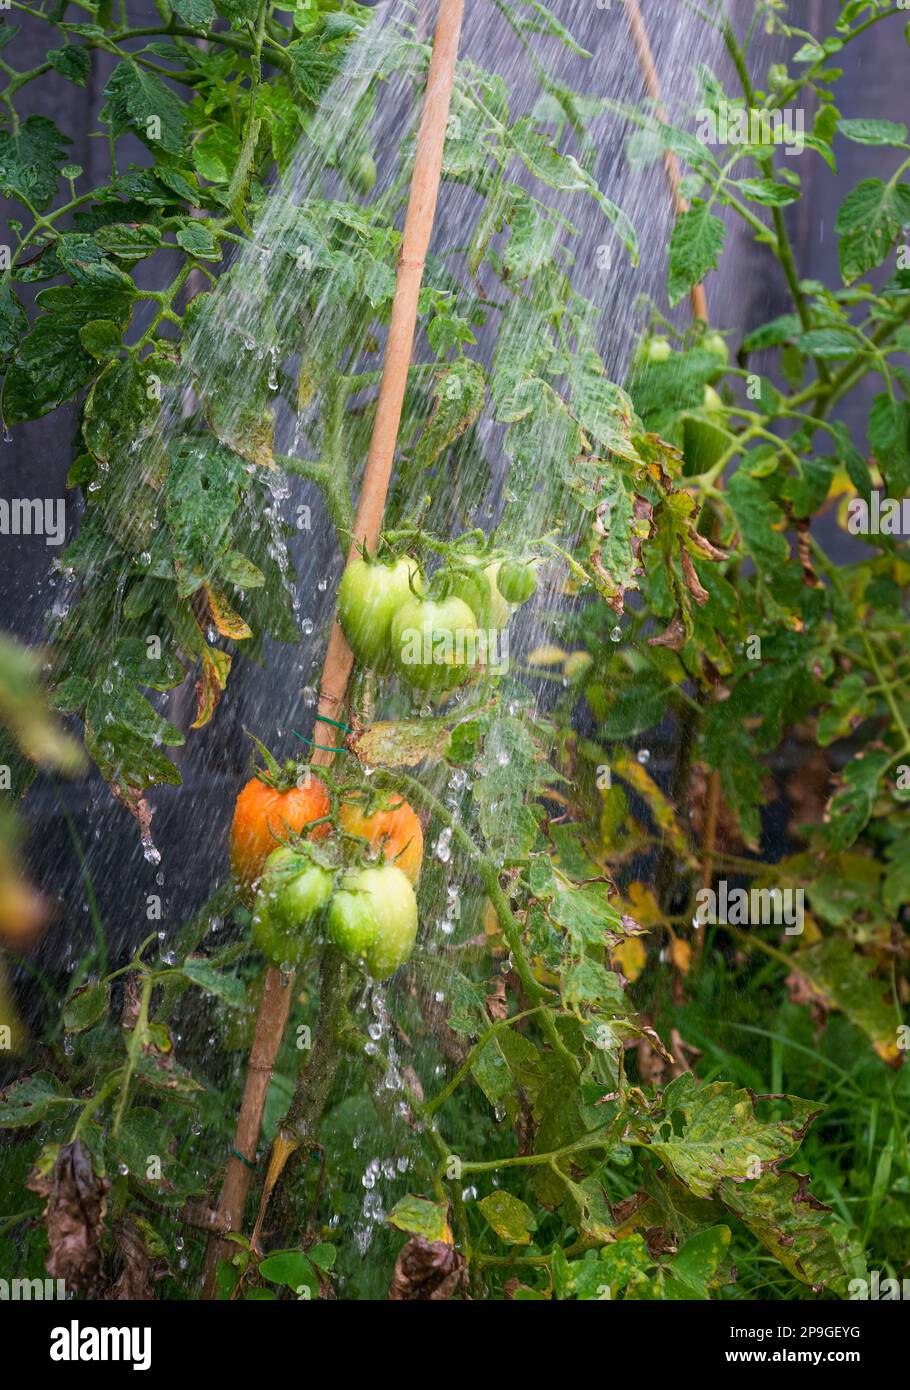 Watering tomato plants in the backyard garden. Vertical format. Stock Photo